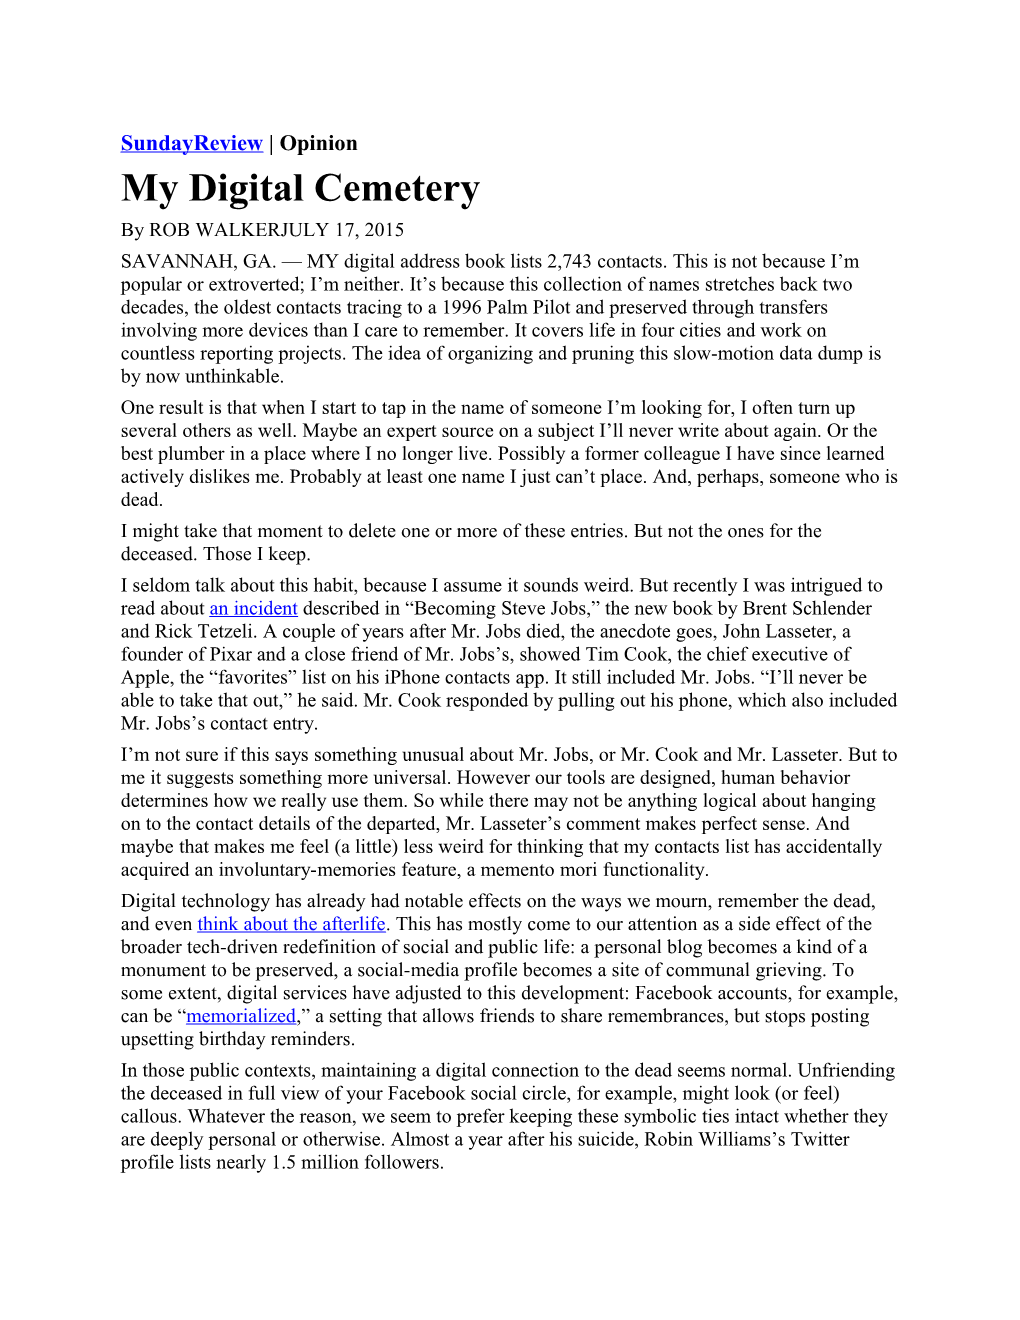 My Digital Cemetery